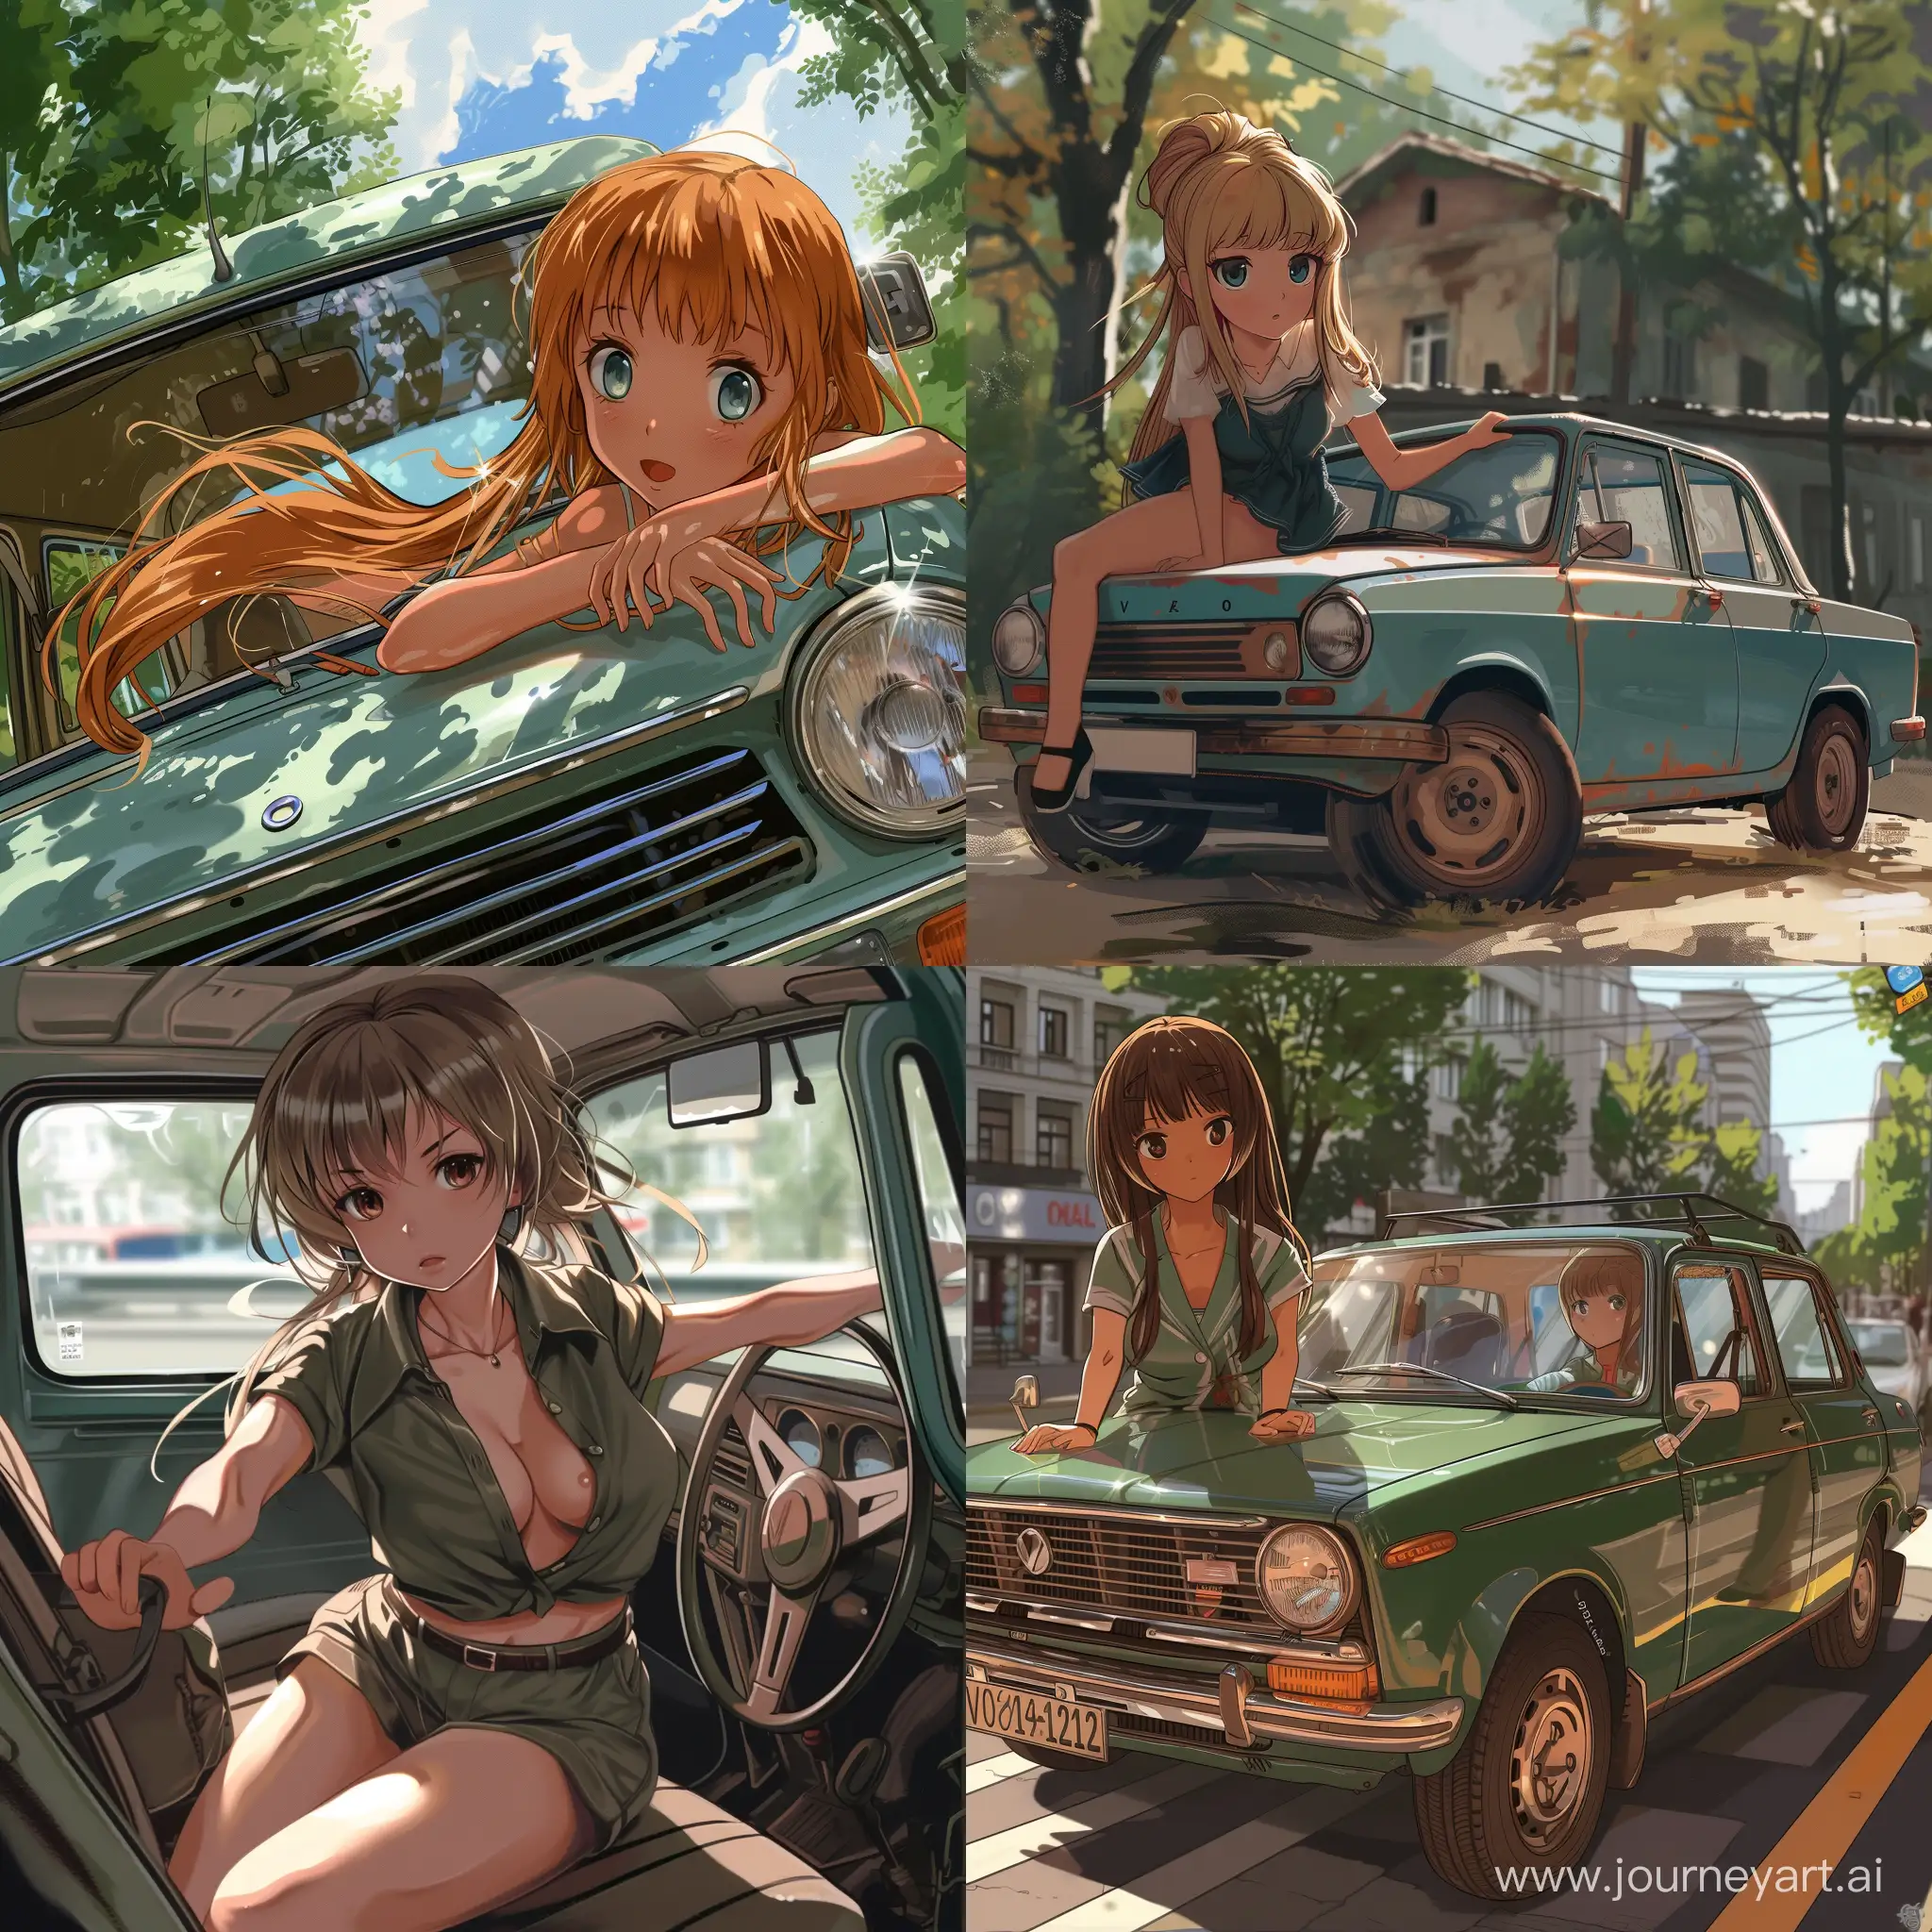 Anime-Girl-Driving-Vintage-VAZ2106-Car-in-Anime-Style